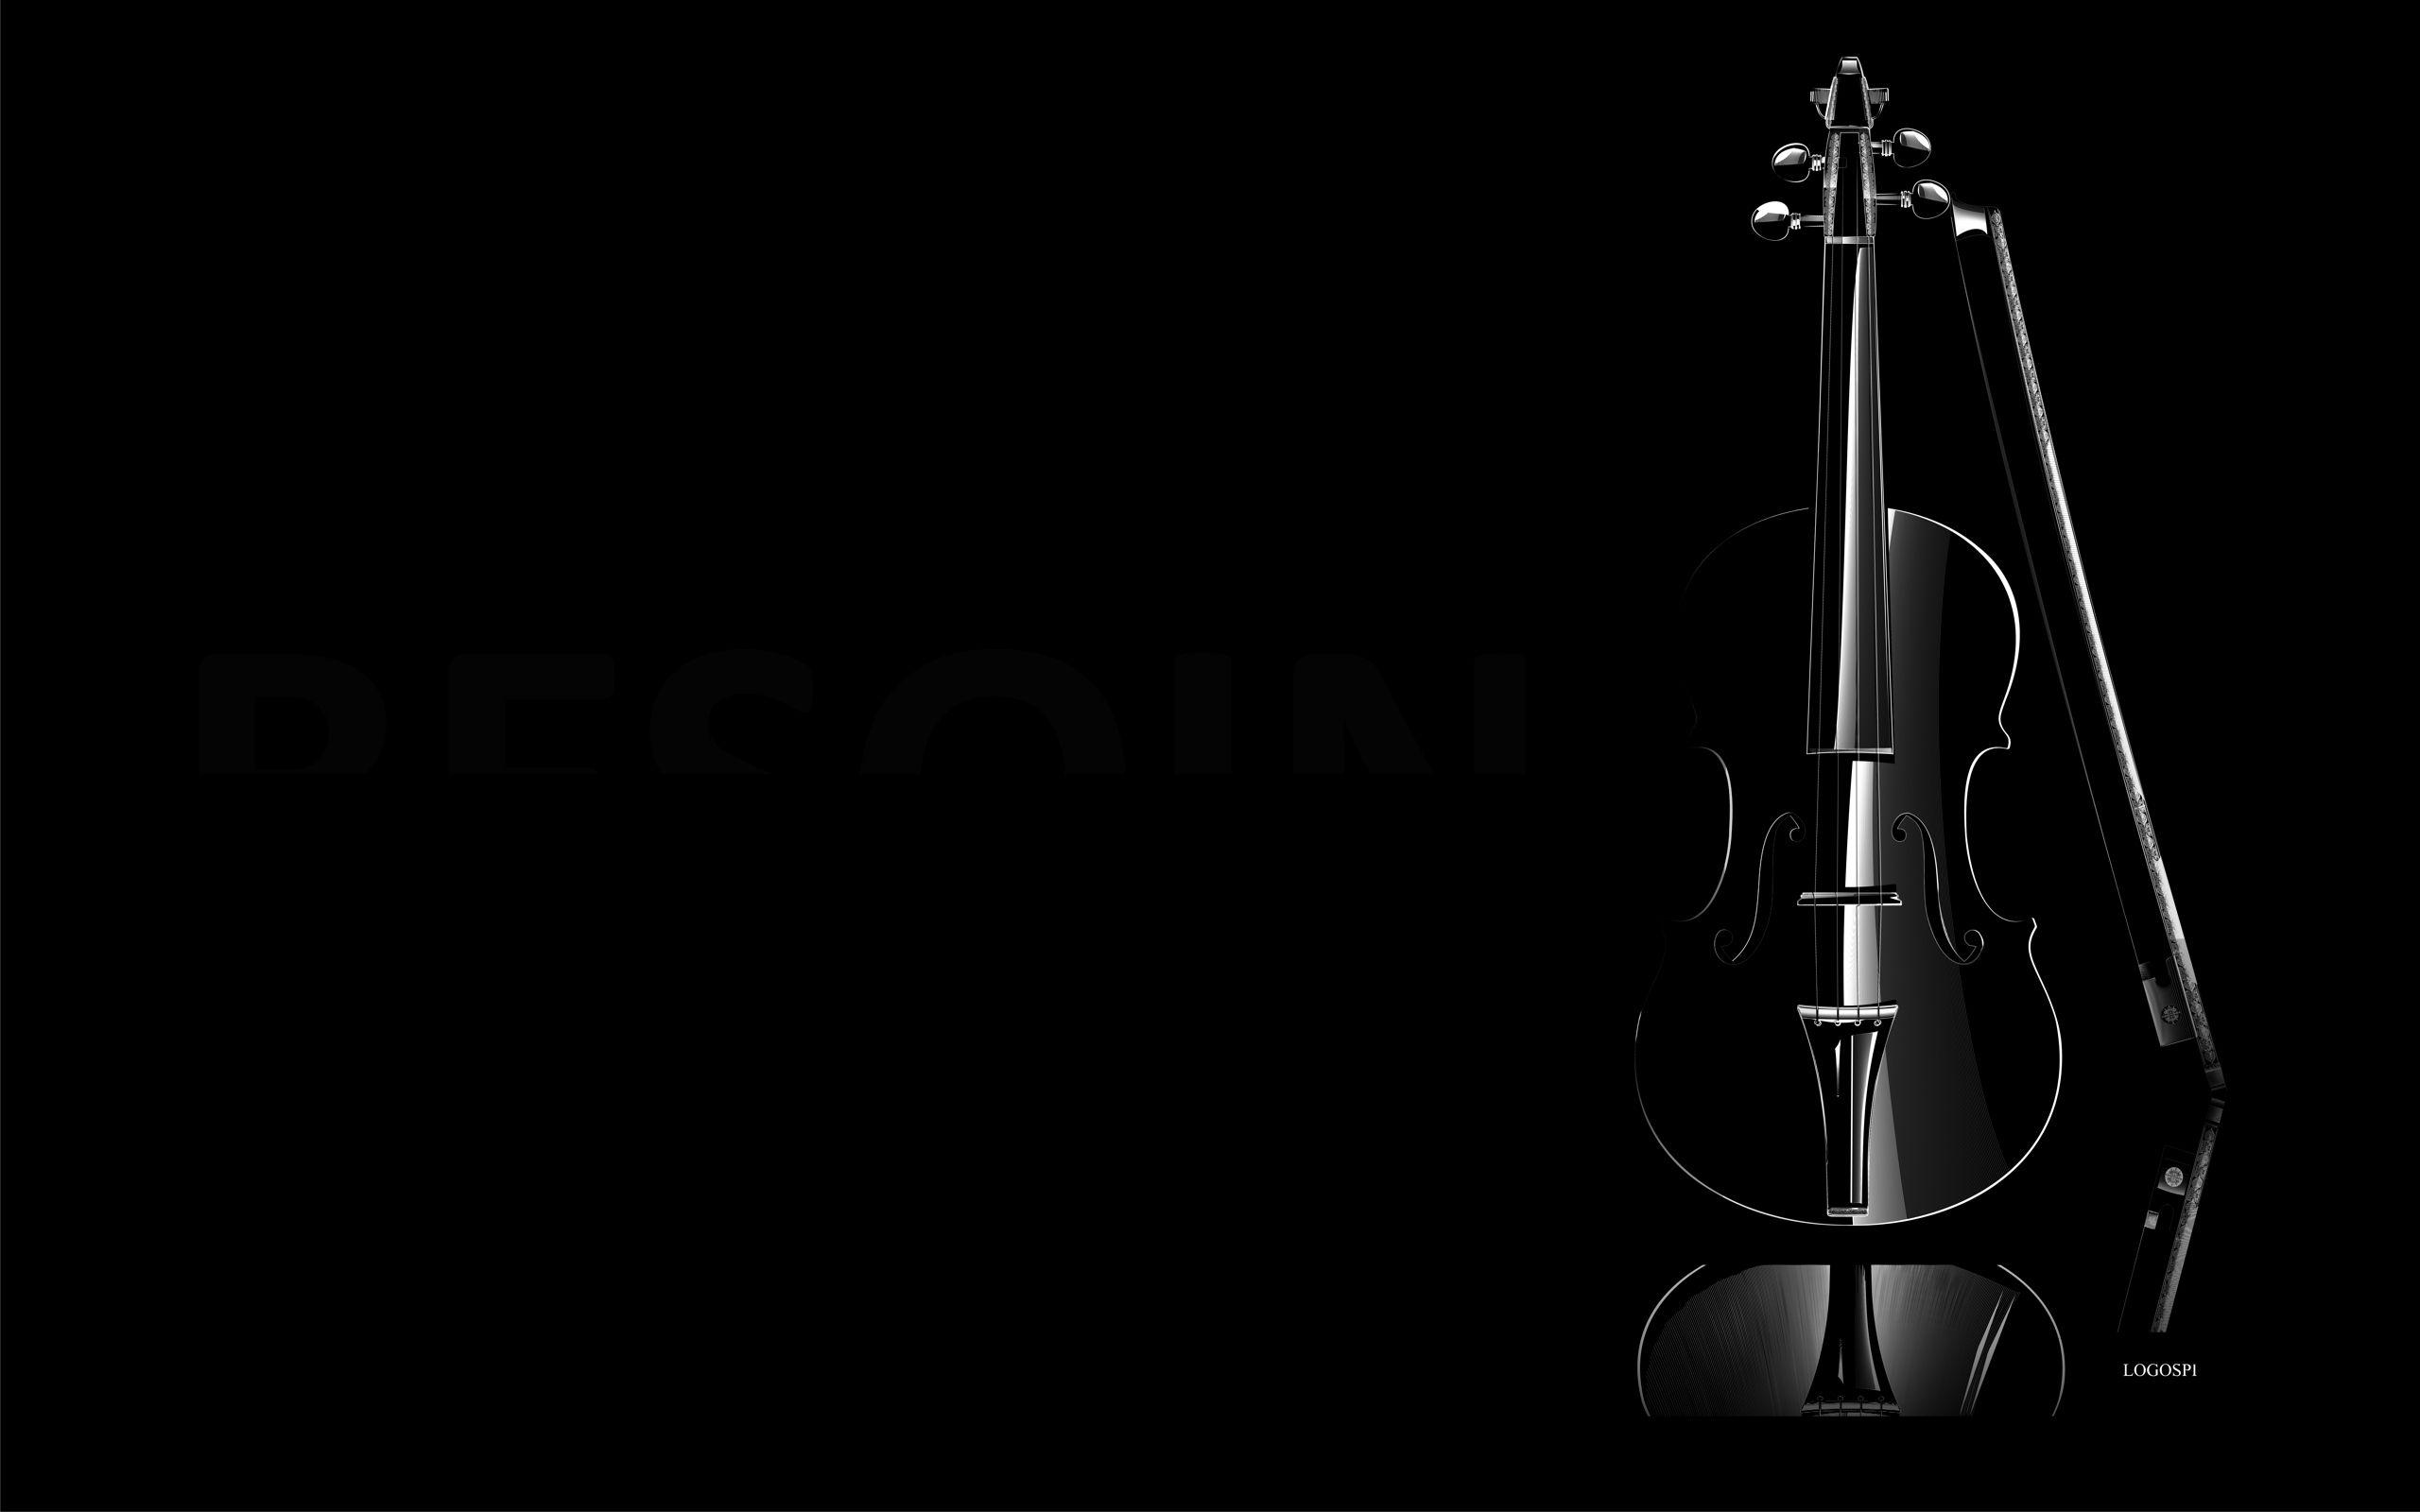 Black Art Wallpaper, Violin Music Creative Black Art